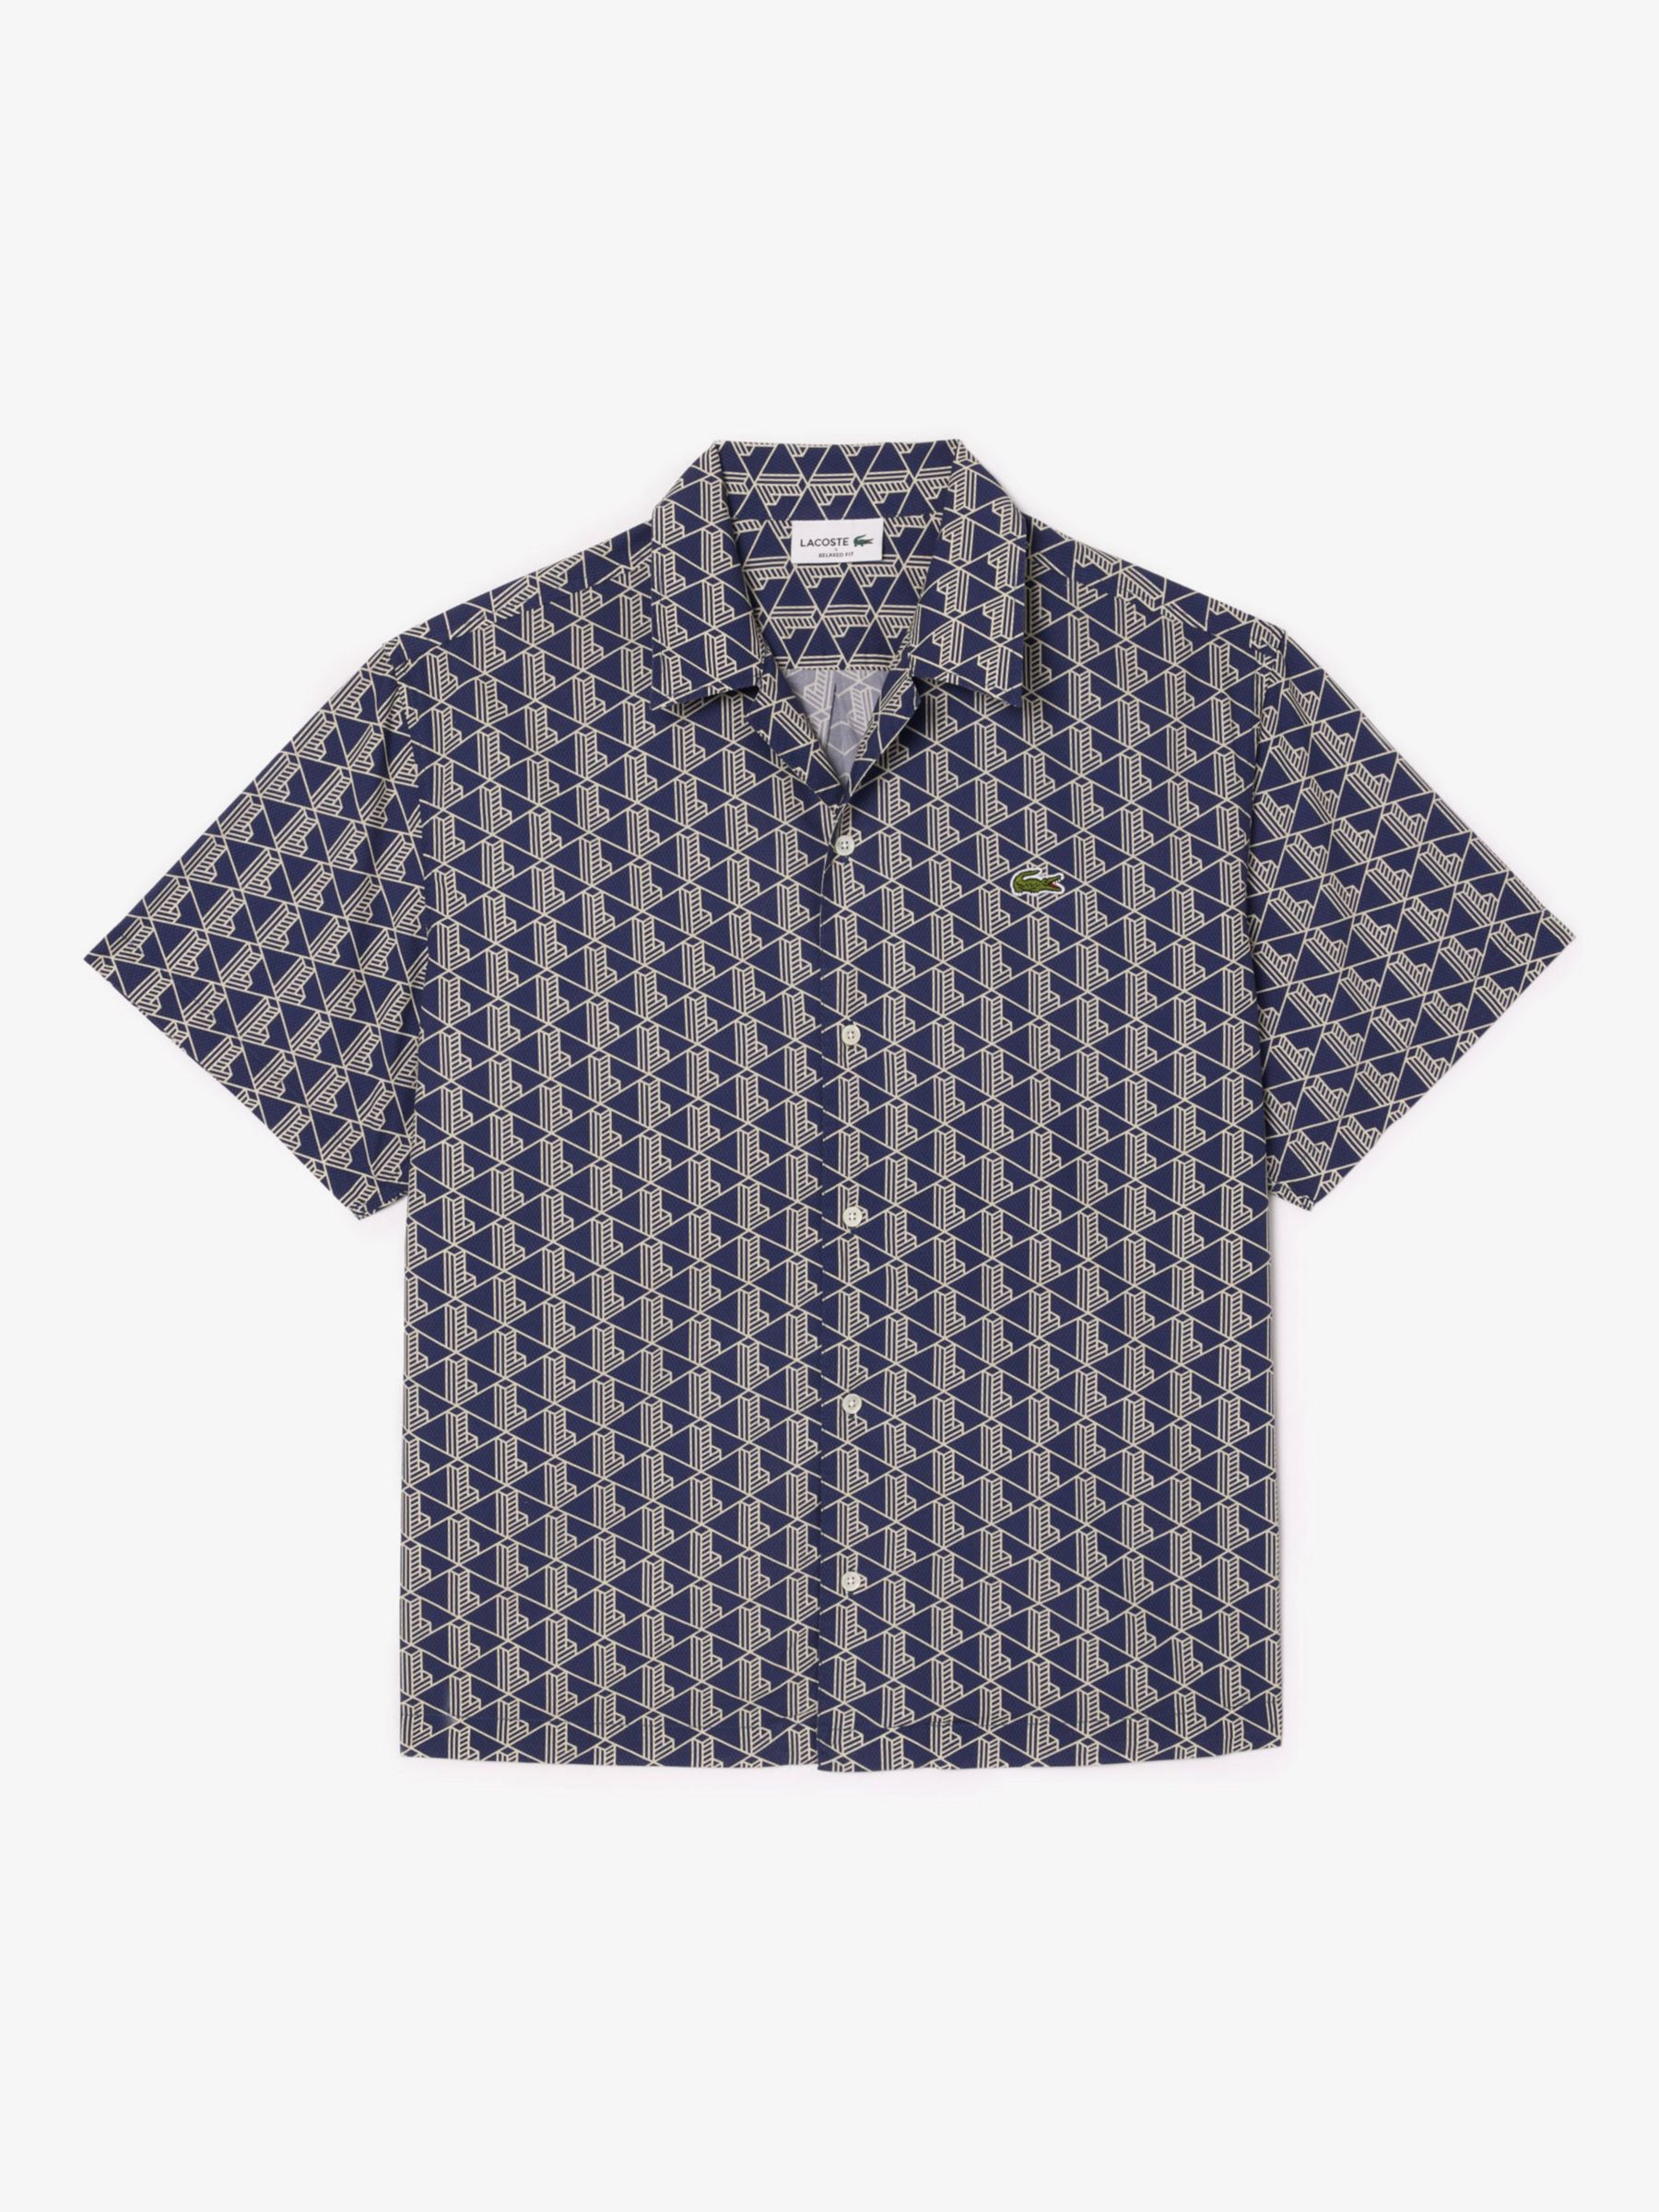 Lacoste Short Sleeve Monogram Print Shirt, Blue/Multi, S